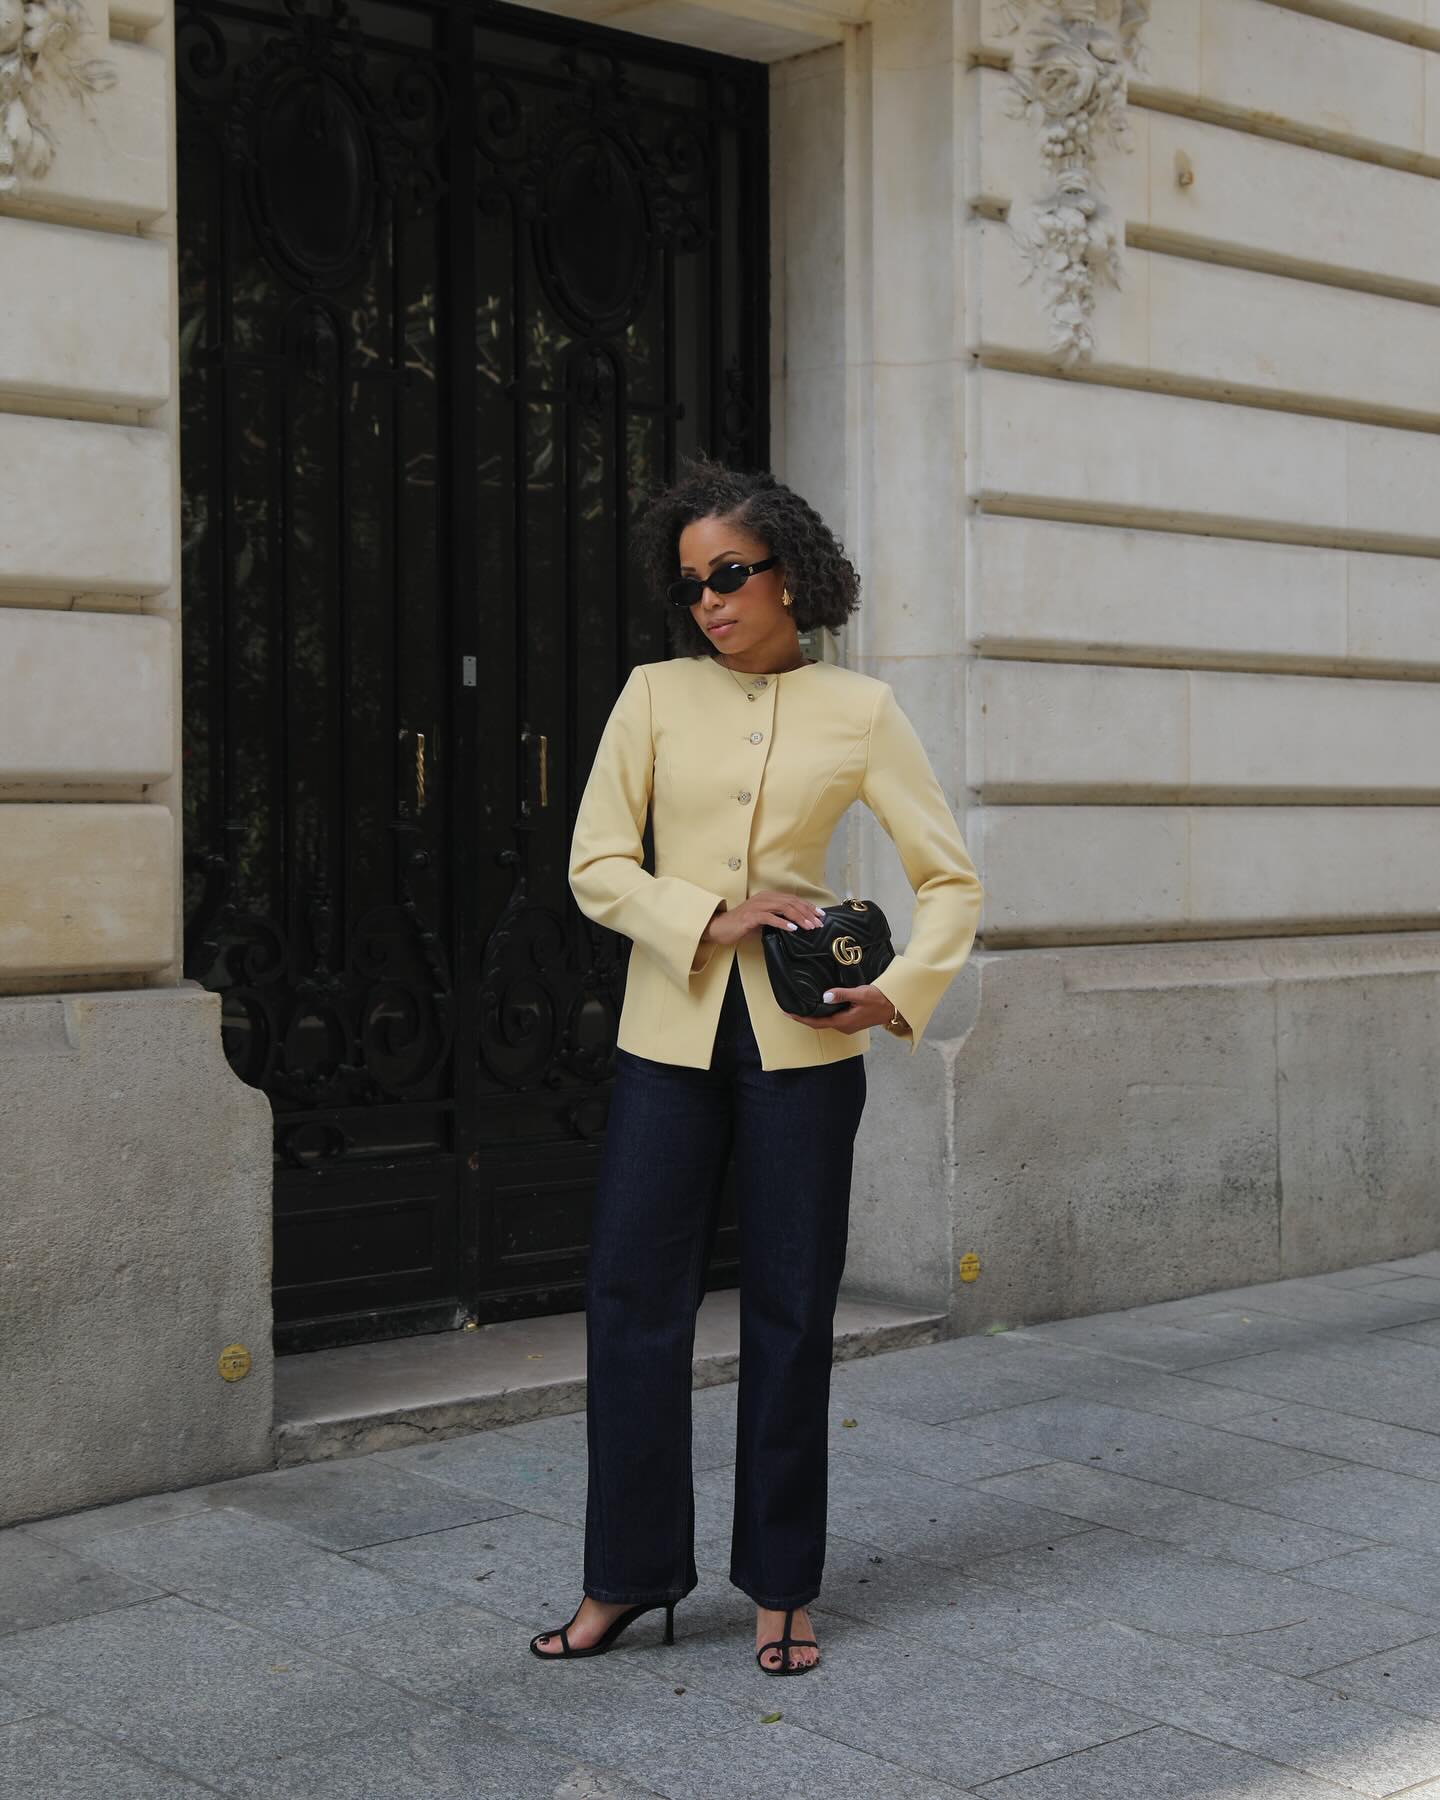 @slipintostyle wearing a yellow Aligne blazer with black pants.